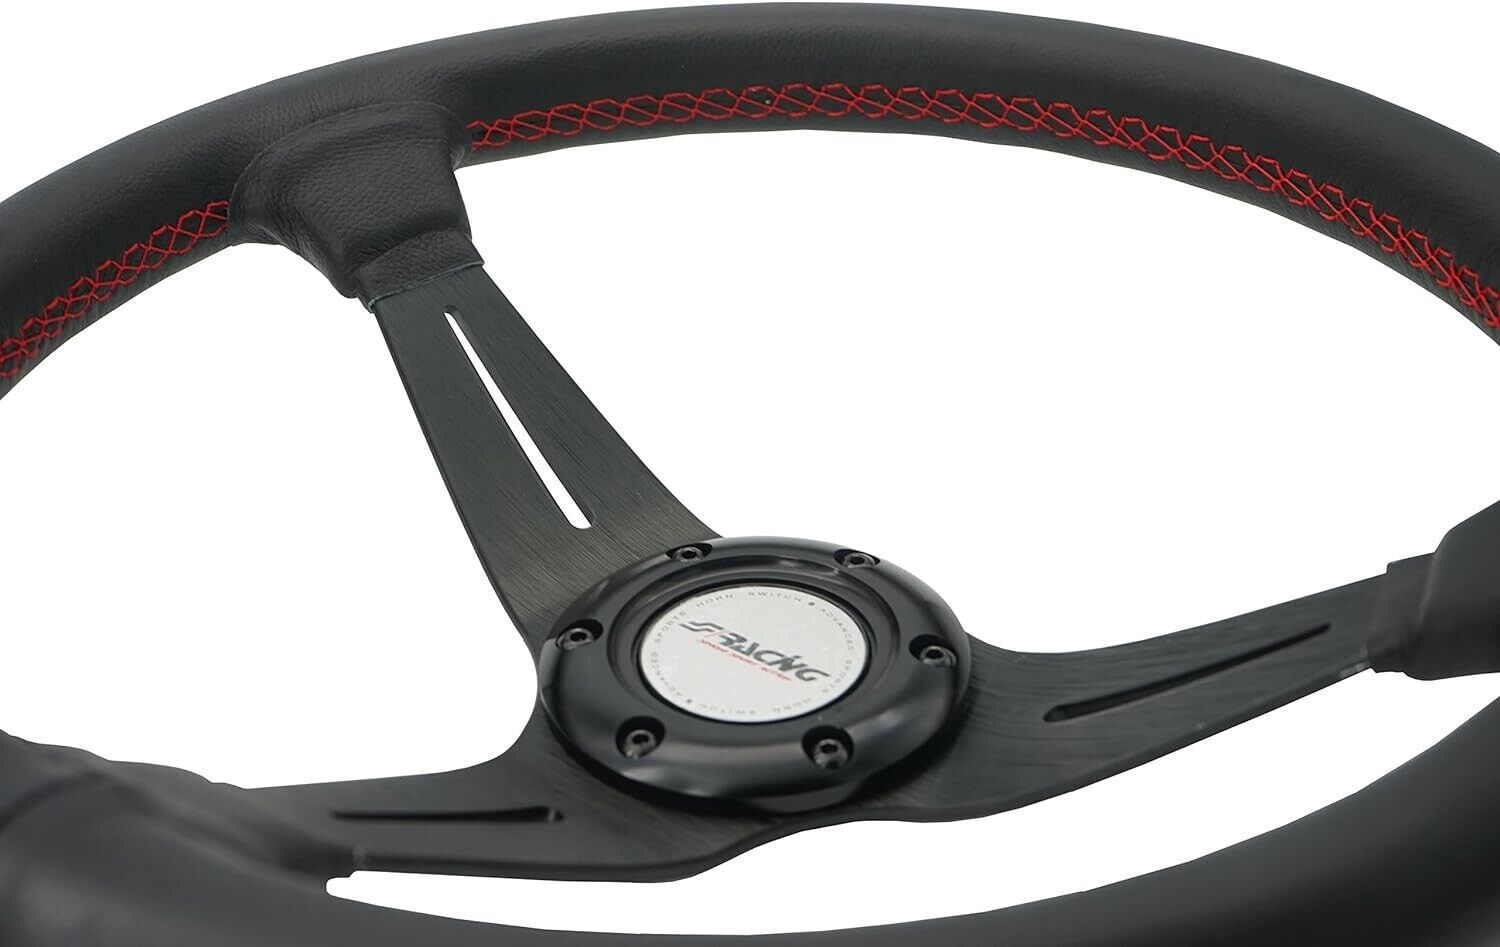 Simoni Racing Universal 350mm Leather Steering WHEEL 3 Spoke Black Red Car Sim